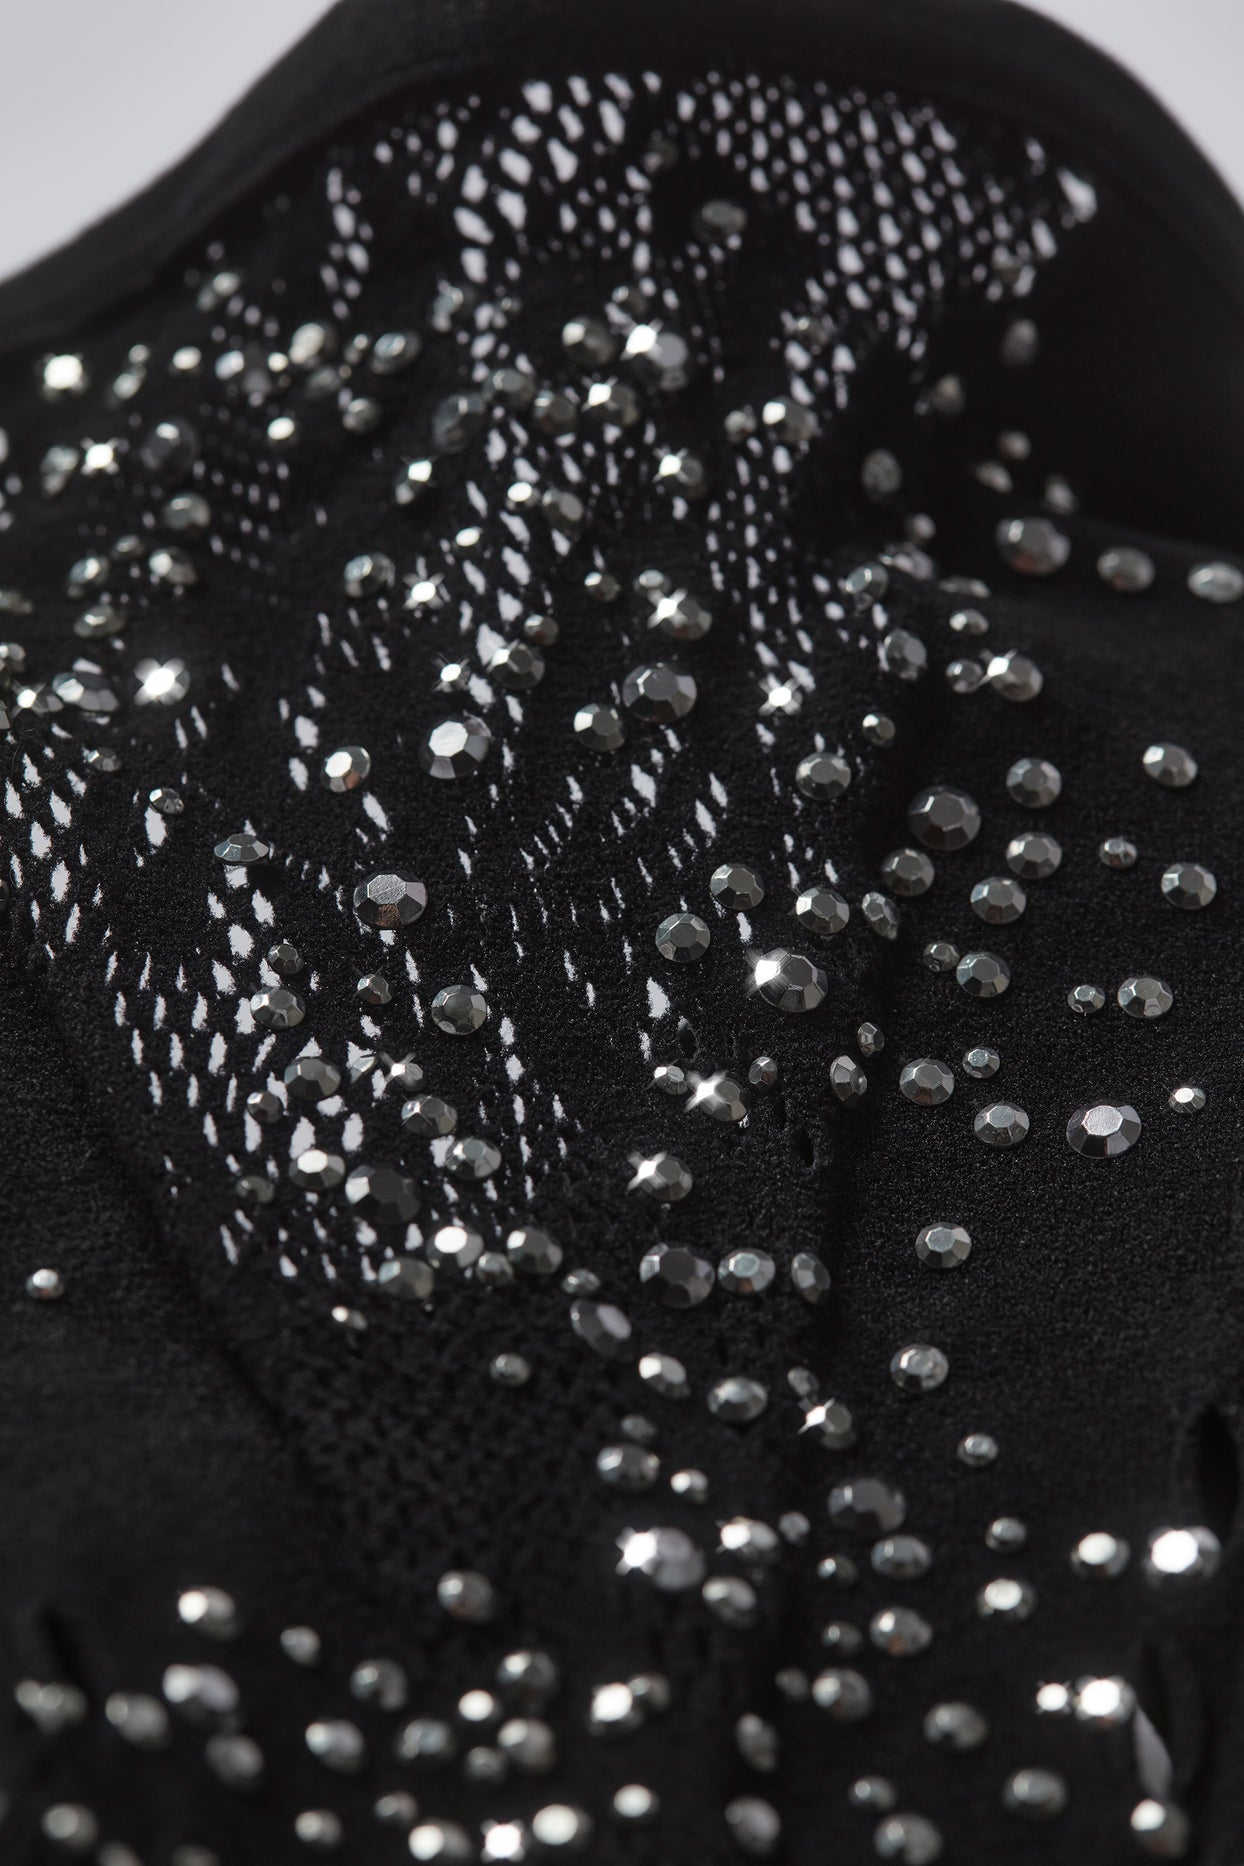 Embellished Lace-Up High-Neck Top in Black